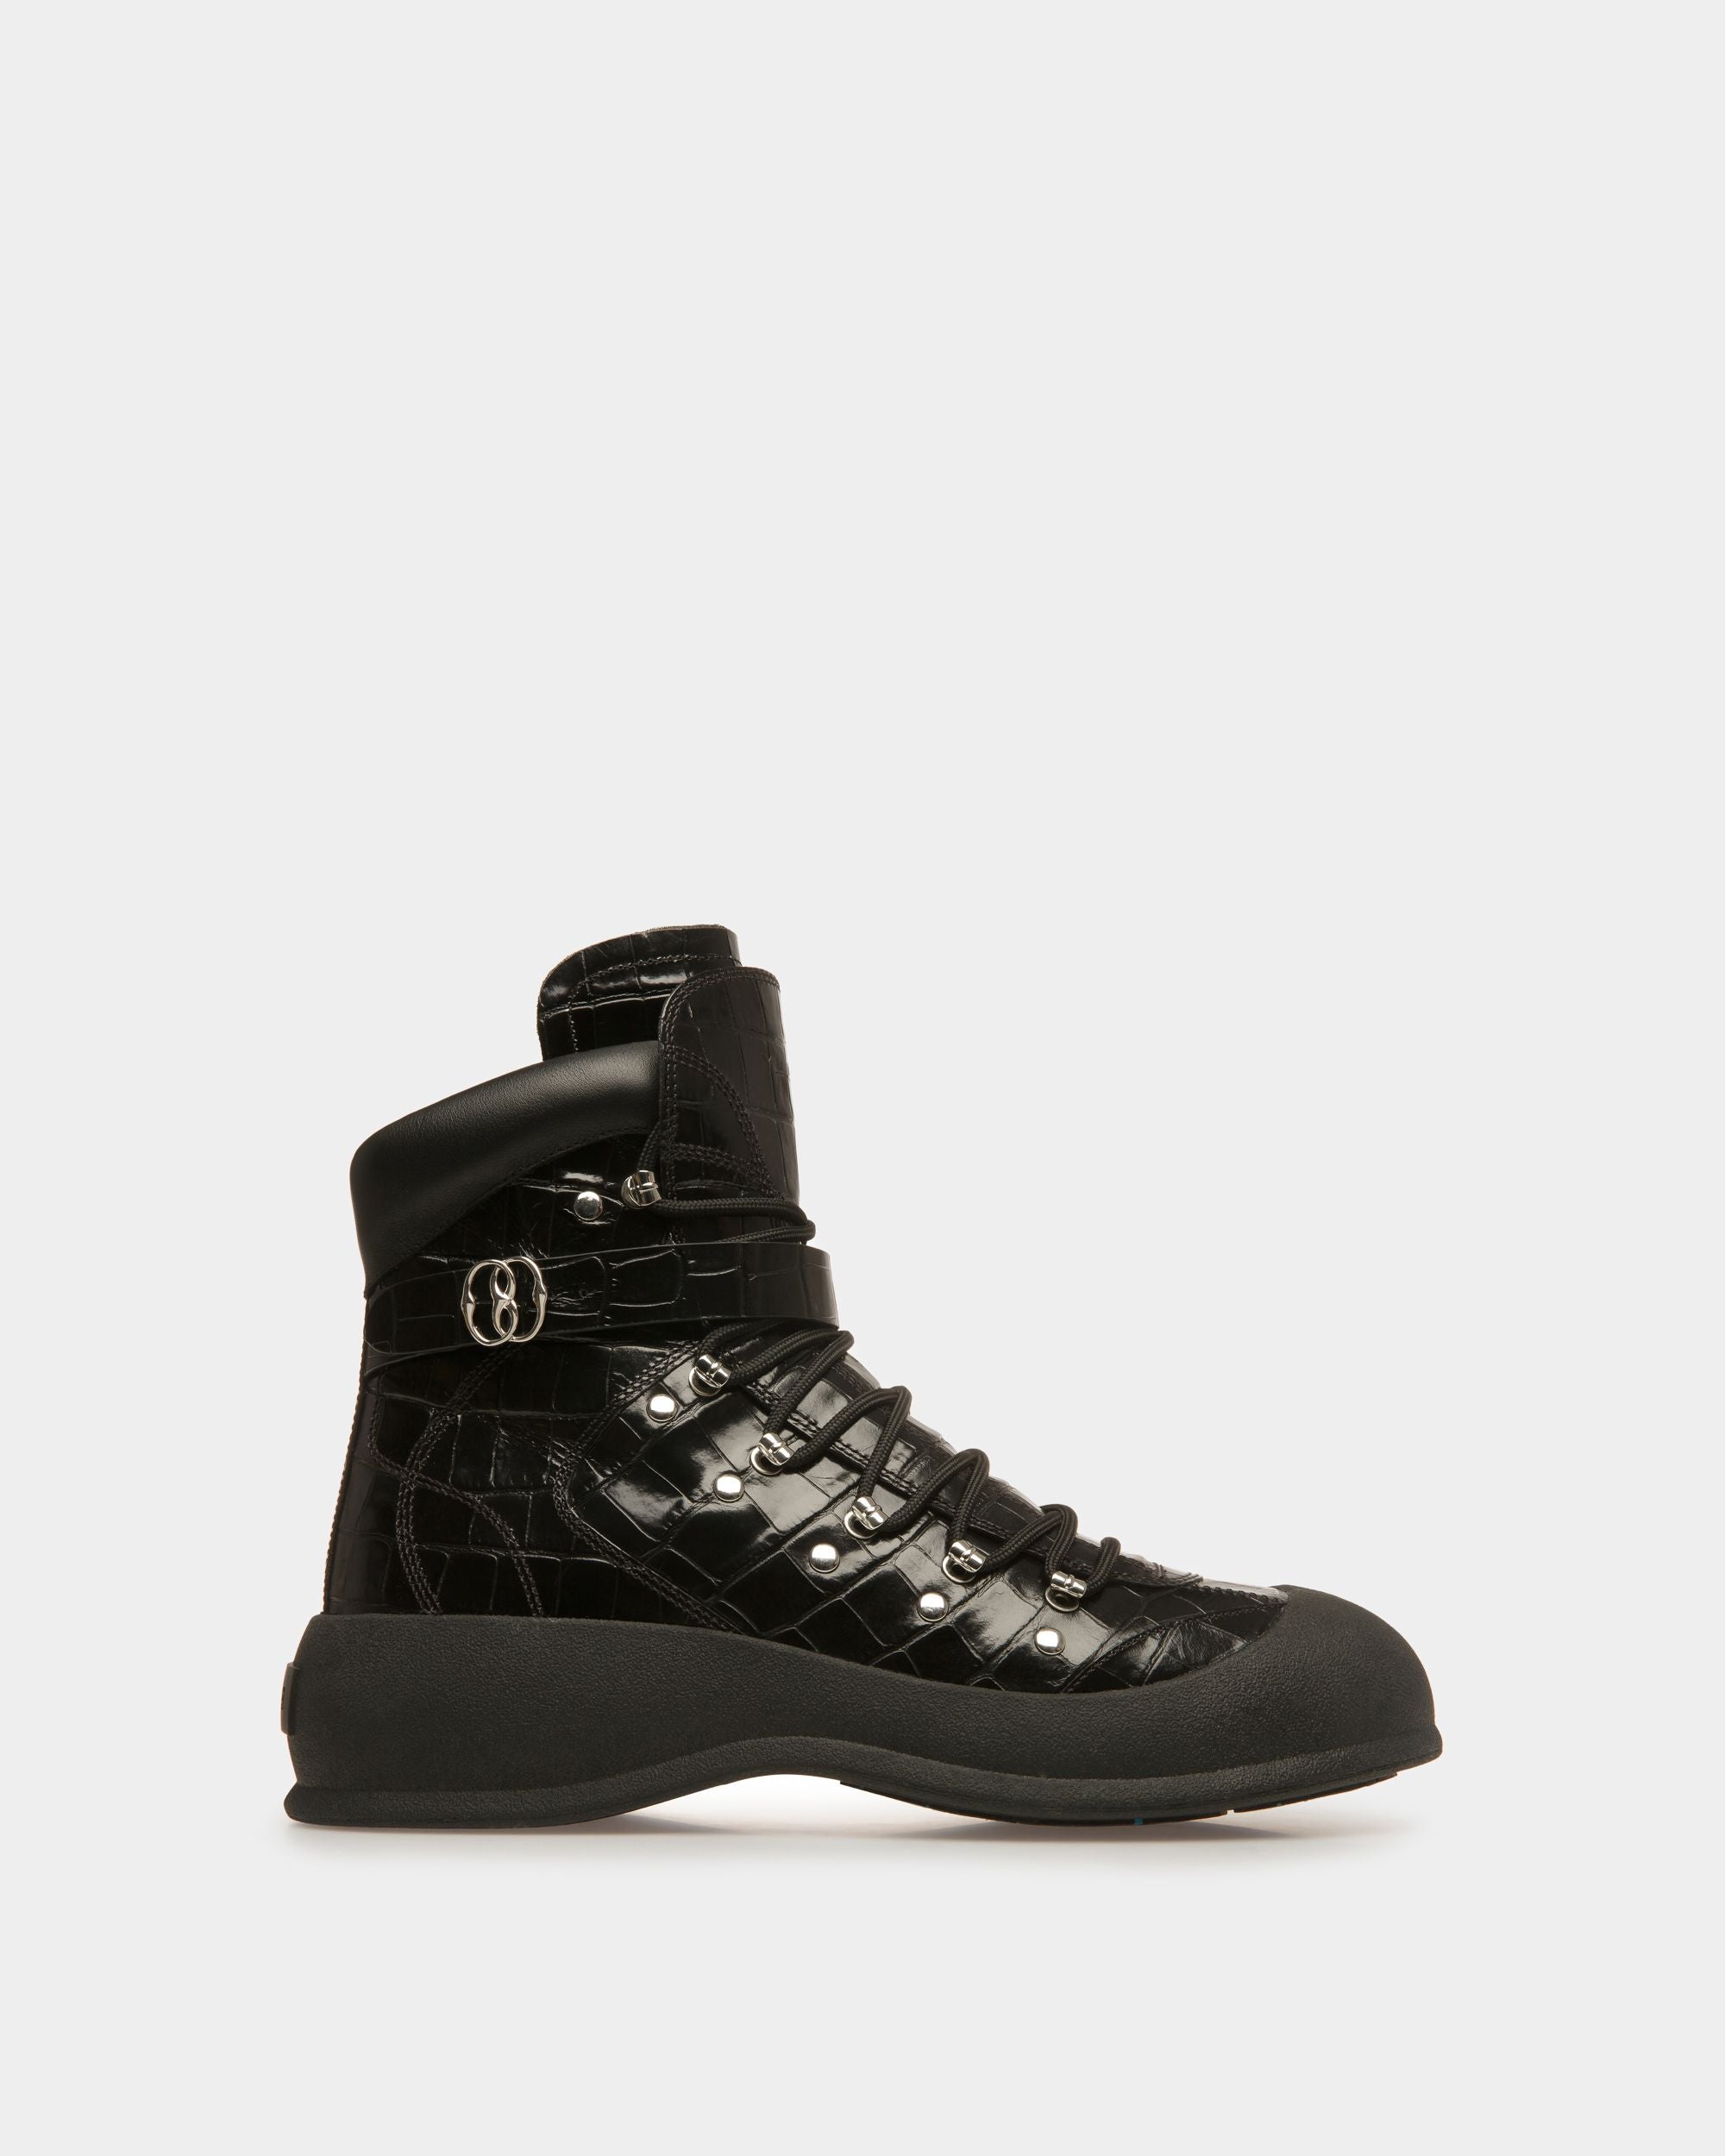 Clyff | Men's Boots | Black Leather | Bally | Still Life Side